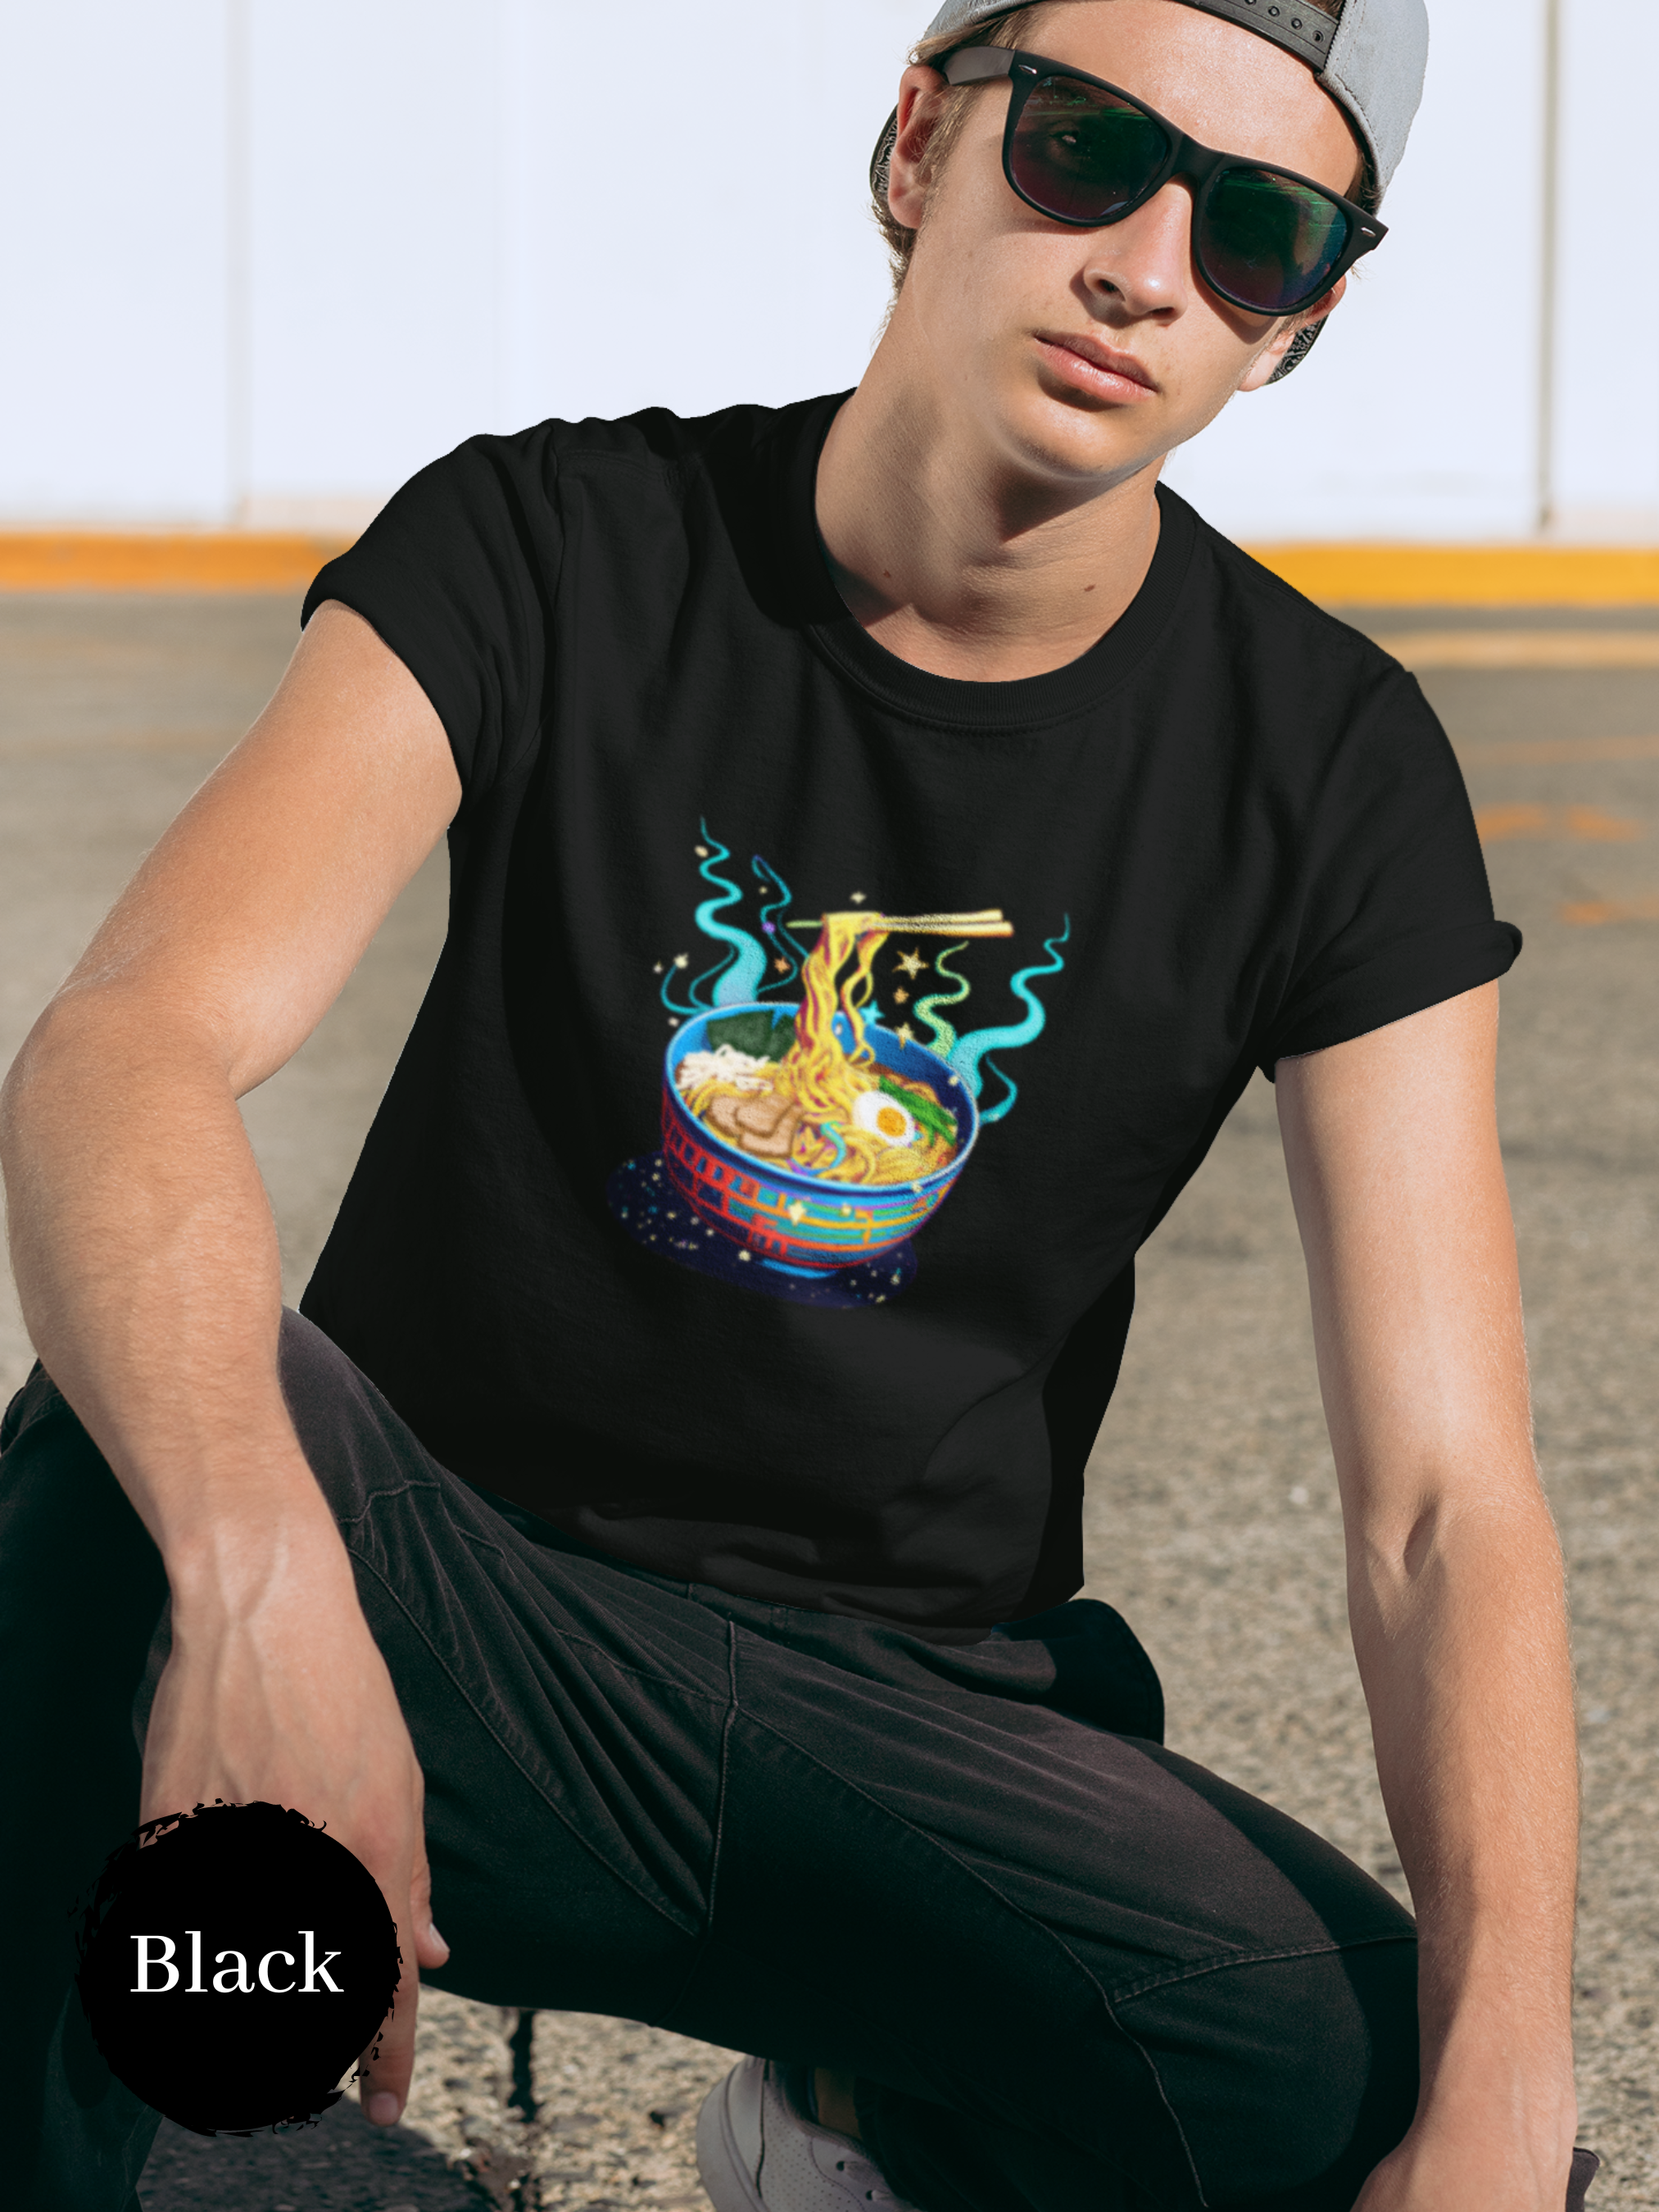 Ramen Galaxy T-Shirt: Japanese Foodie Shirt with Ramen Bowl and Space Art